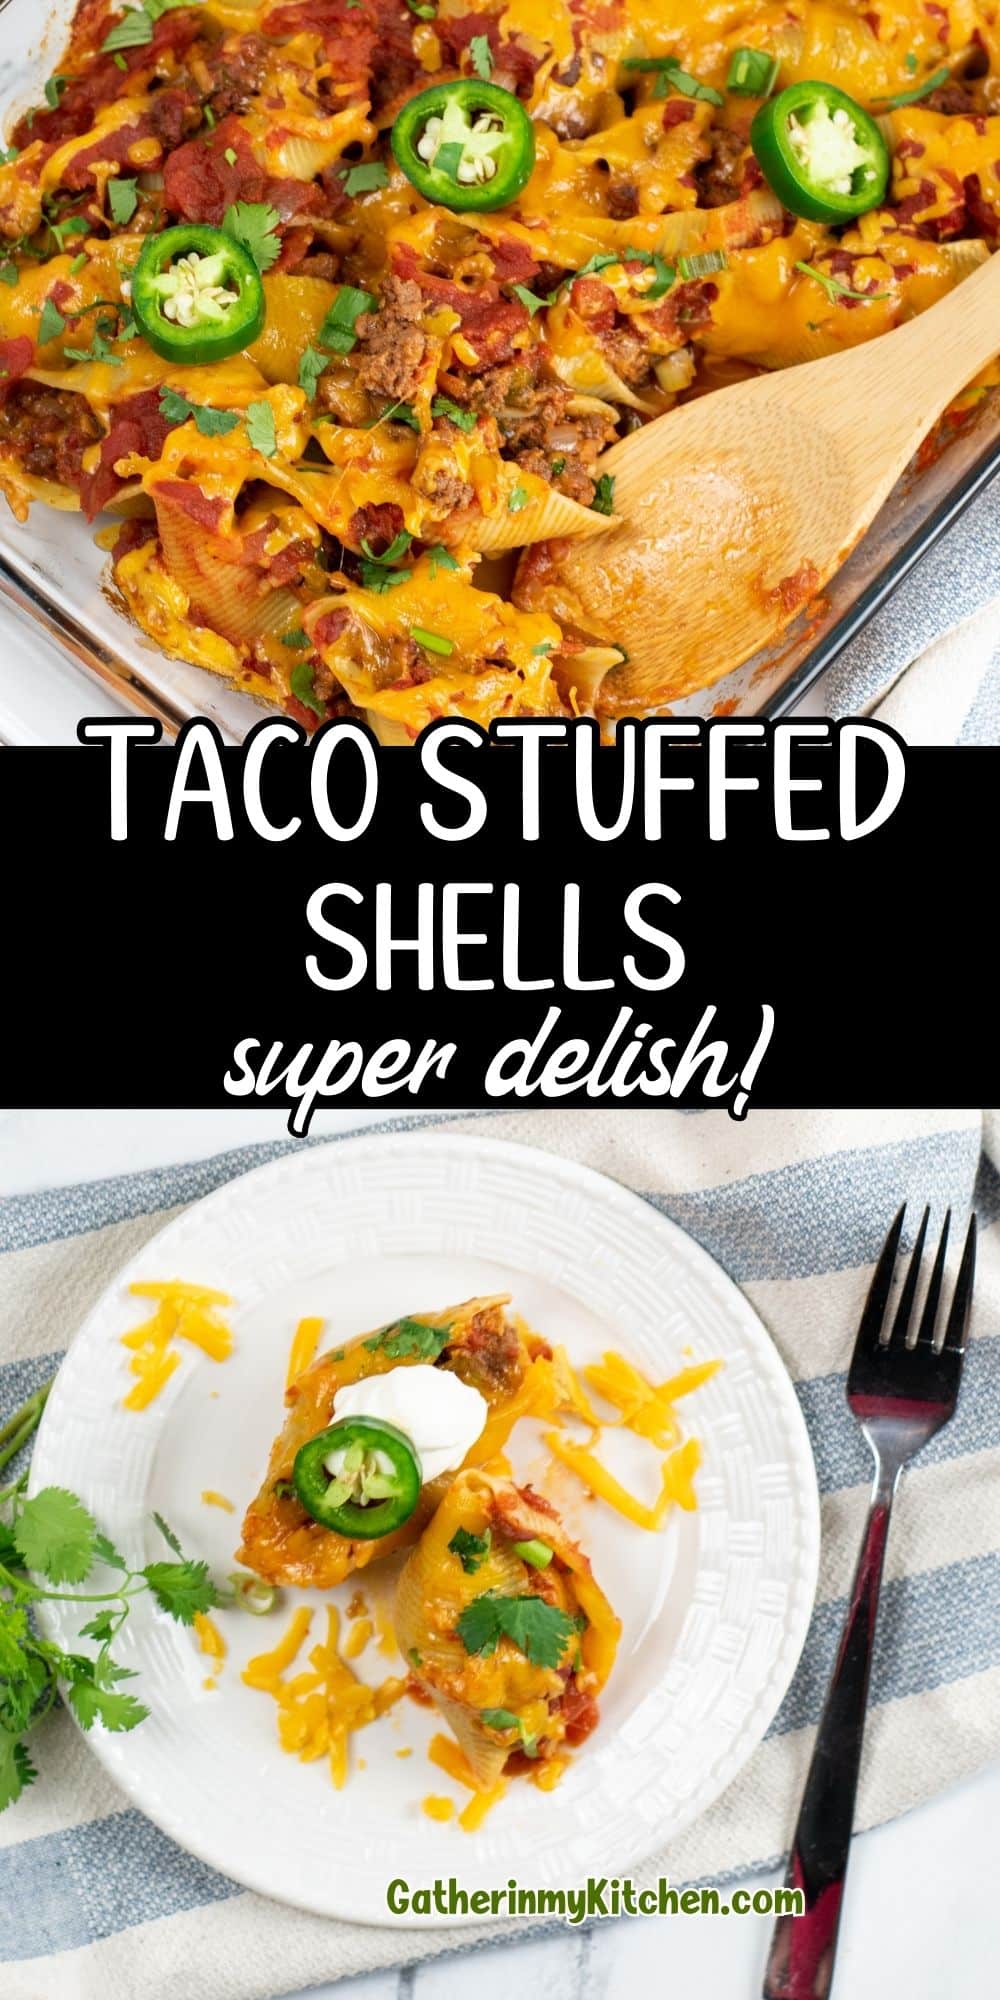 Pin image: top and bottom pics of taco stuffed shells, middle says "Taco Stuffed Shells super delish!".